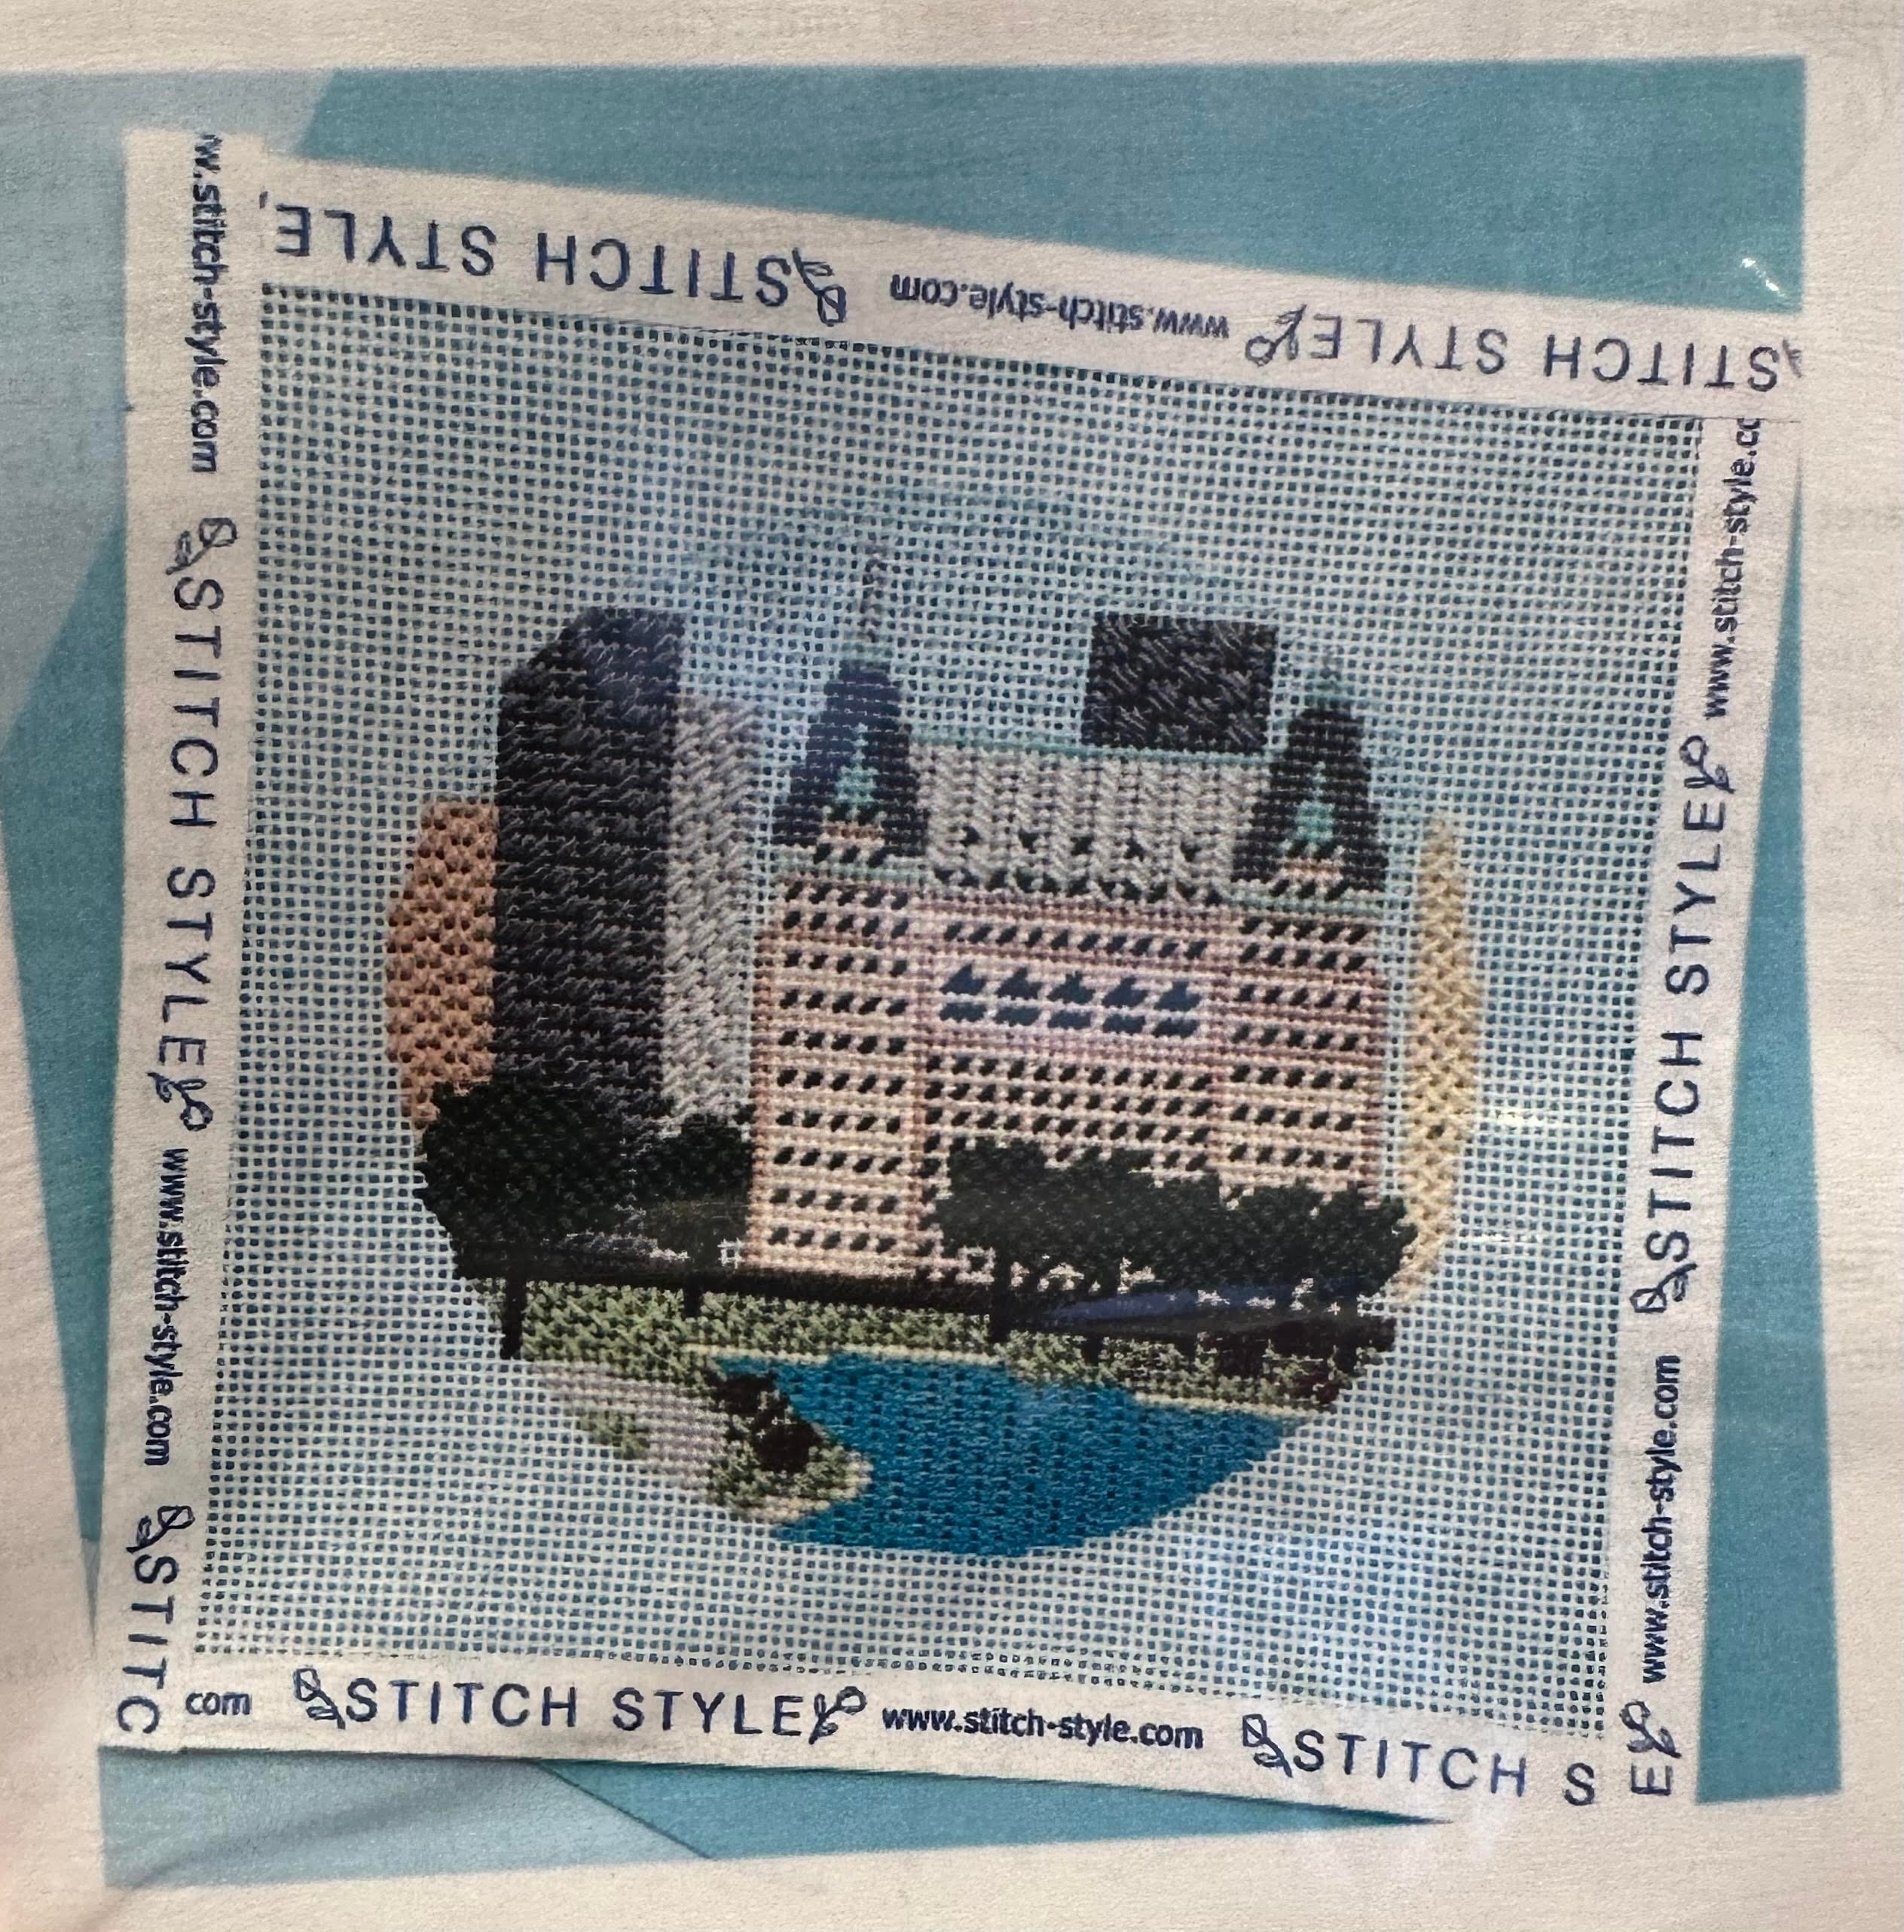 Stitch Style SS086 Plaza Hotel with Stitch Guide